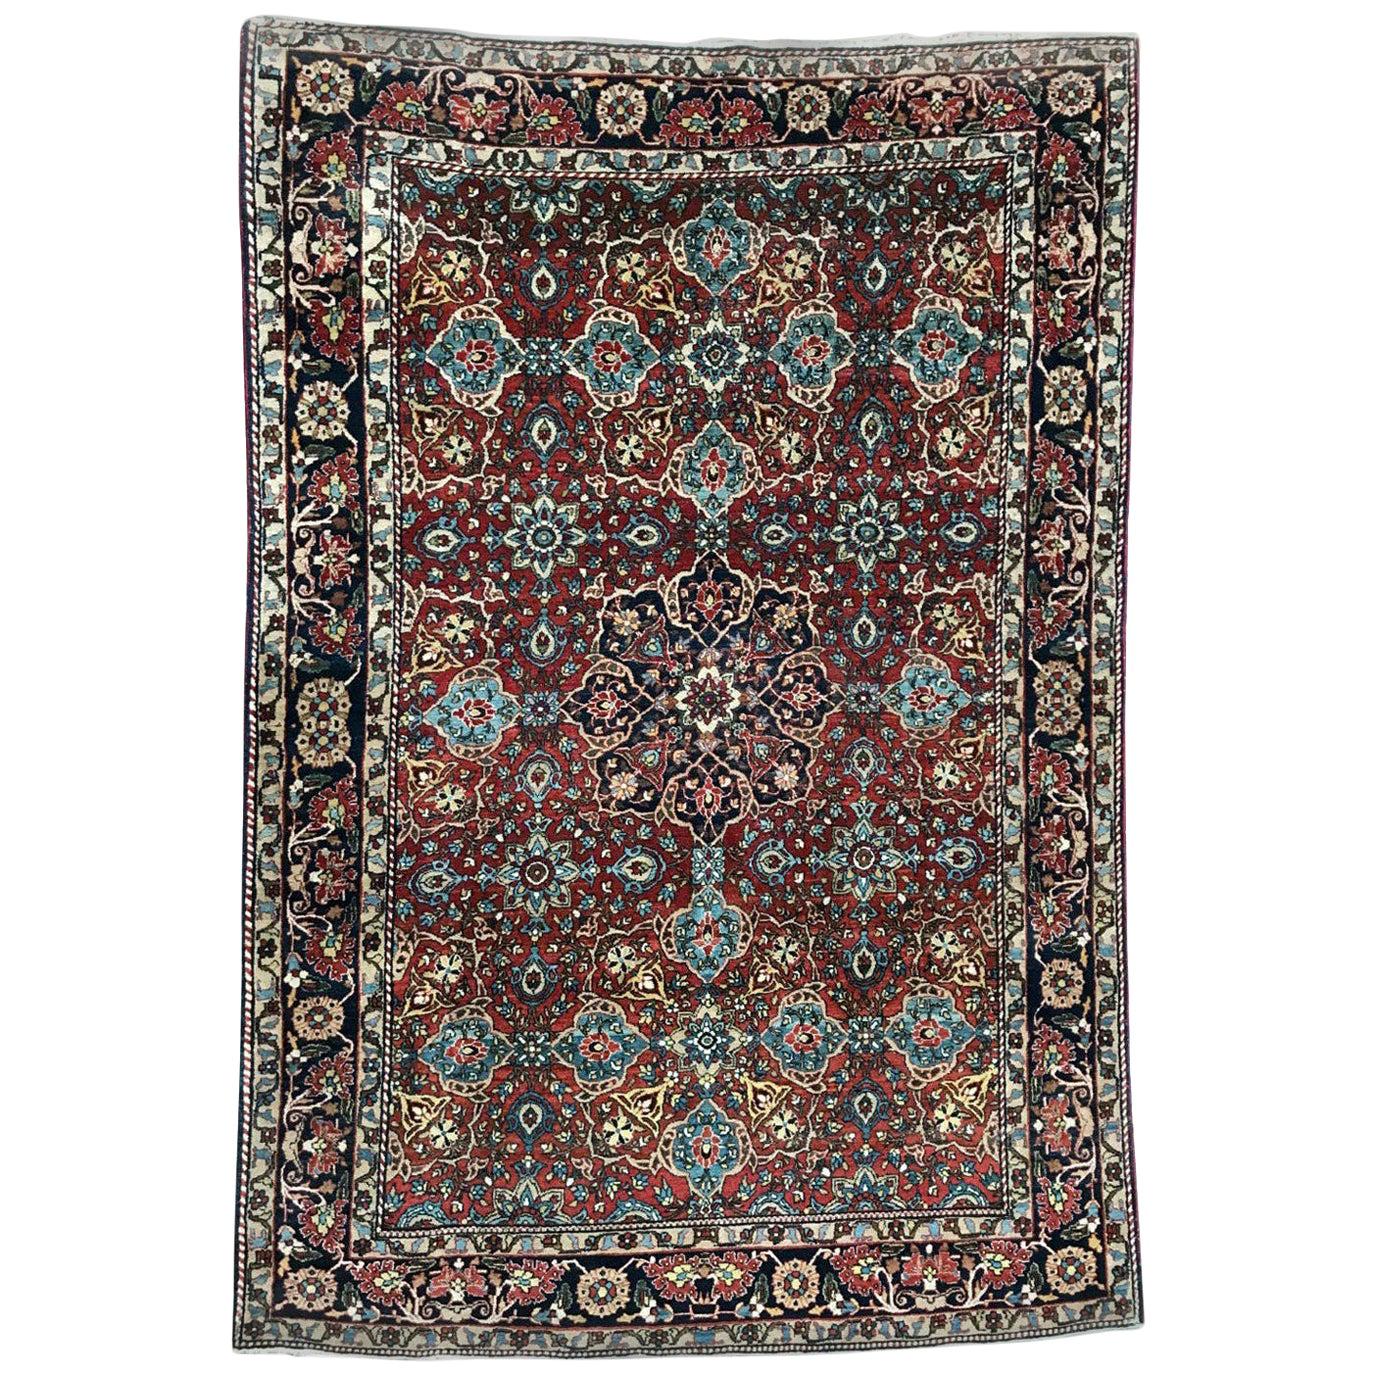 Bobyrug's Wonderful Fine Antique Ispahan Rug (Merveilleux tapis ancien d'Ispahan)